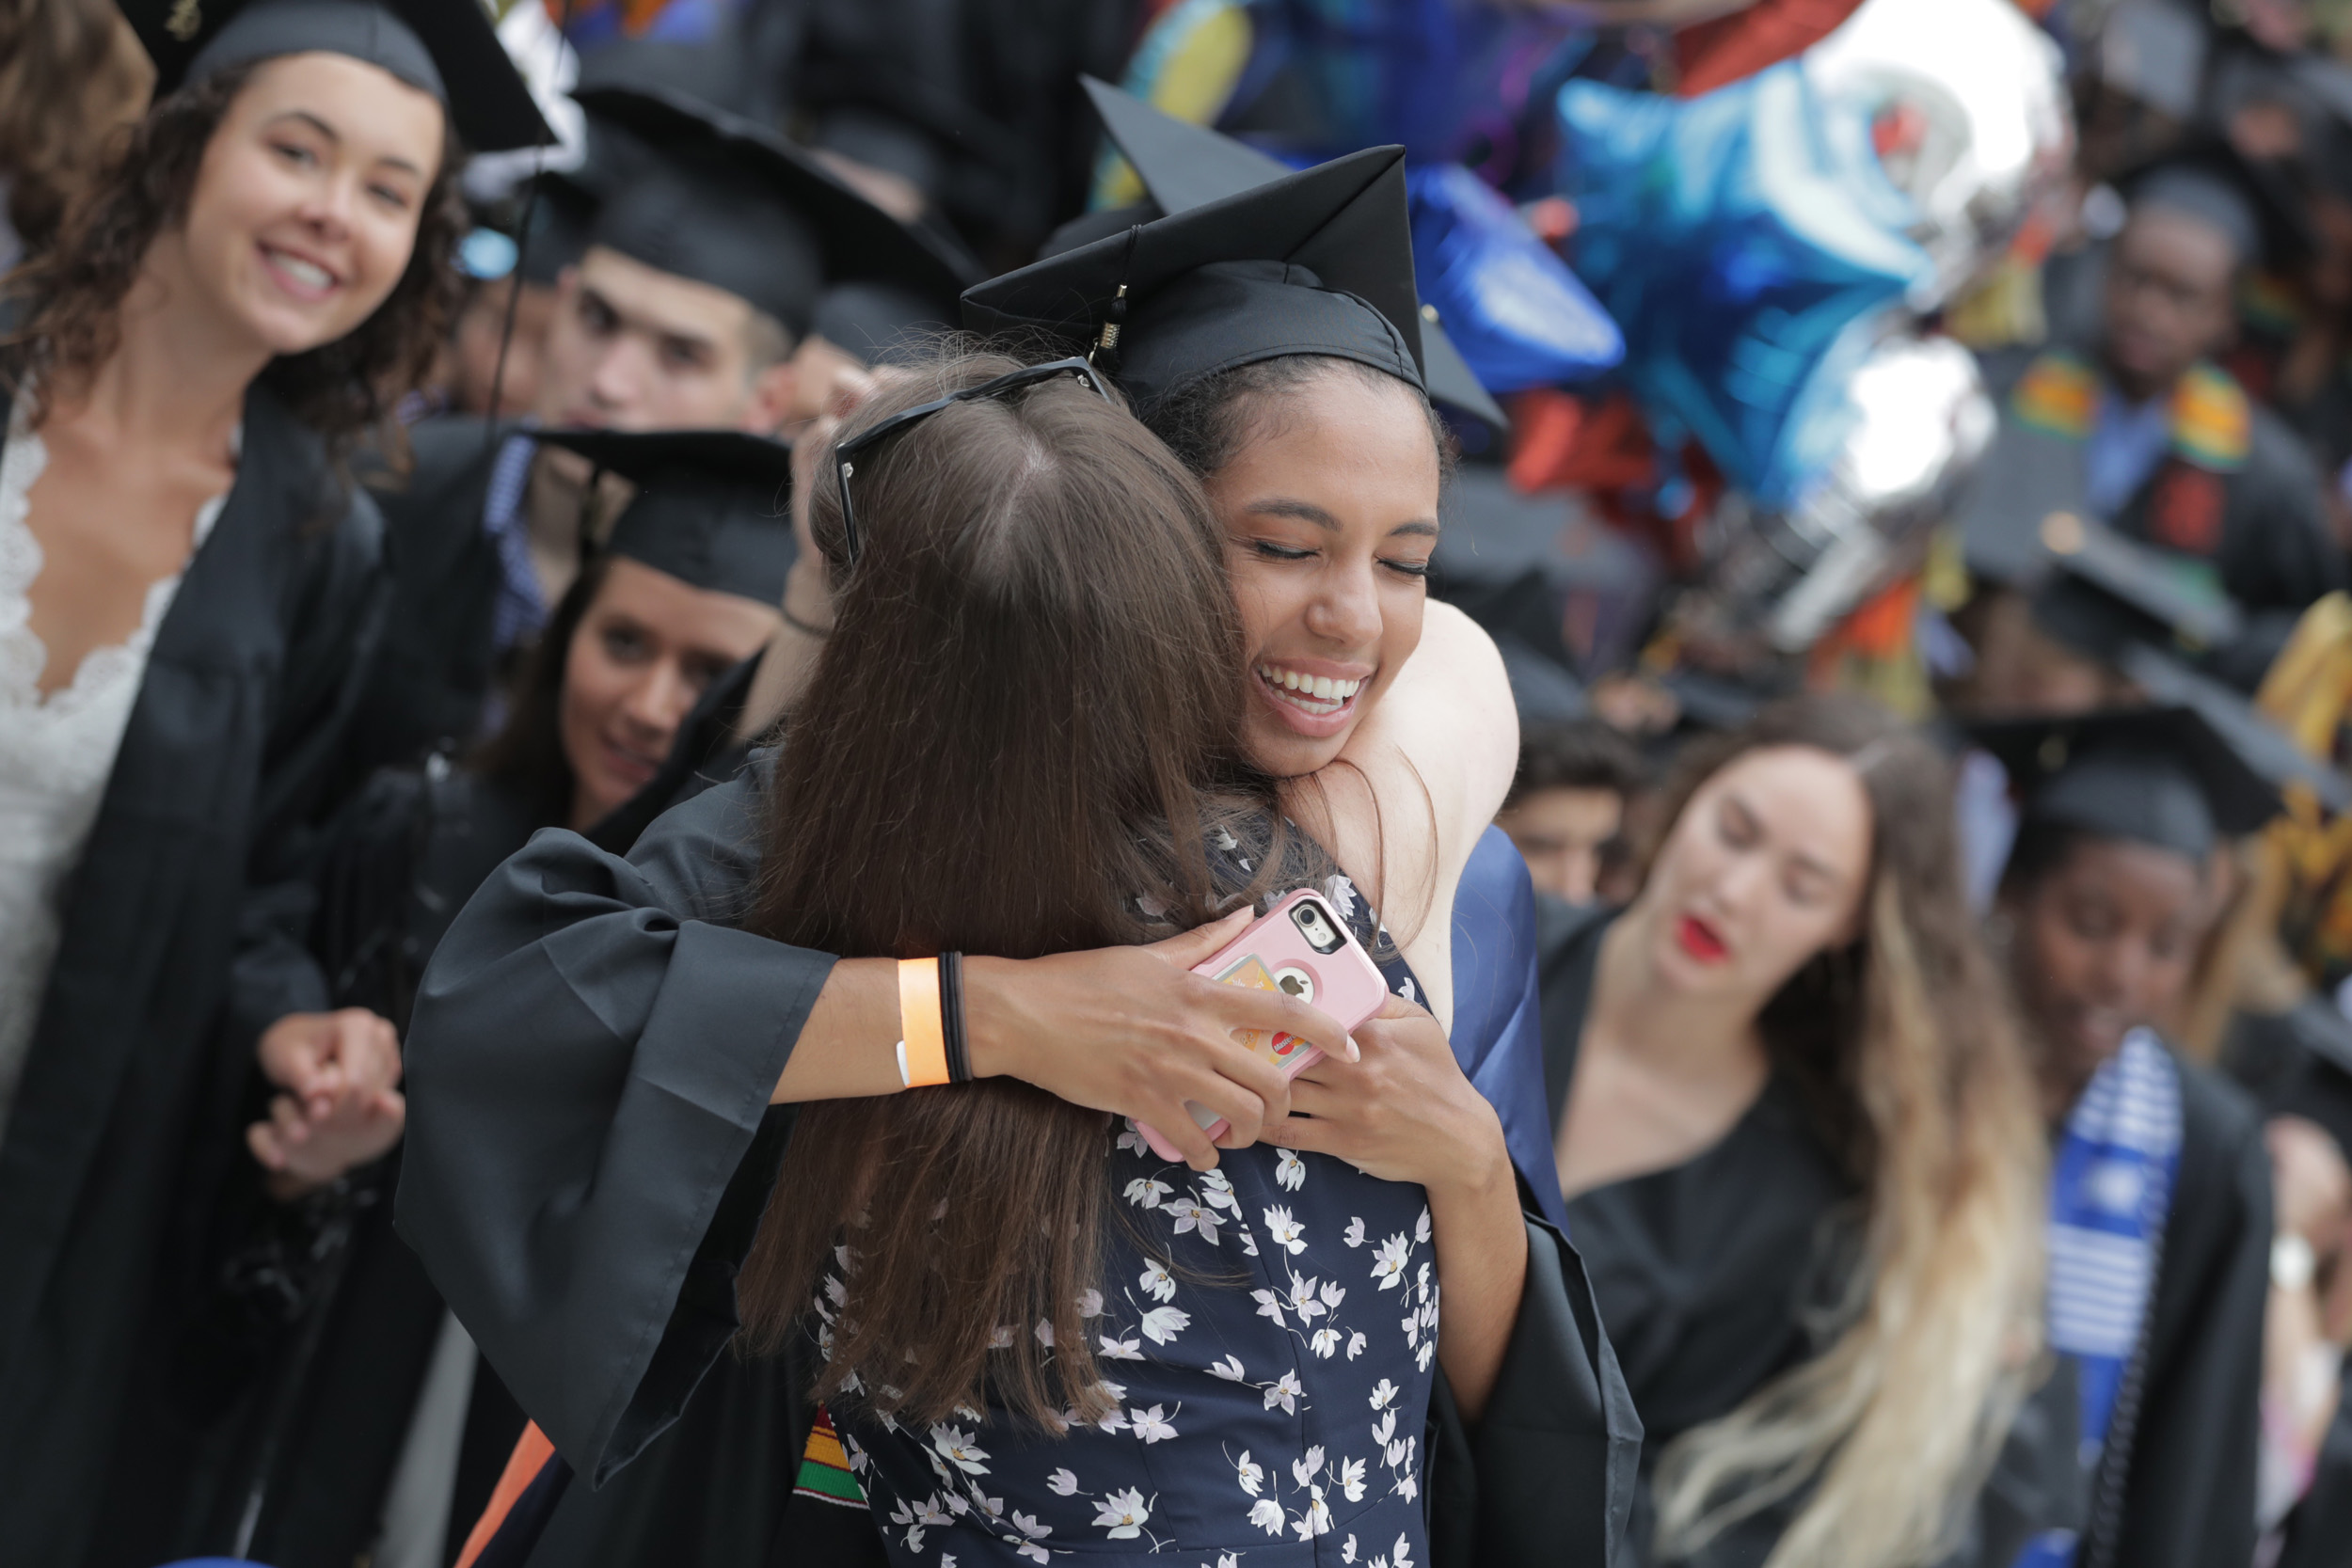 Graduate hugs a woman